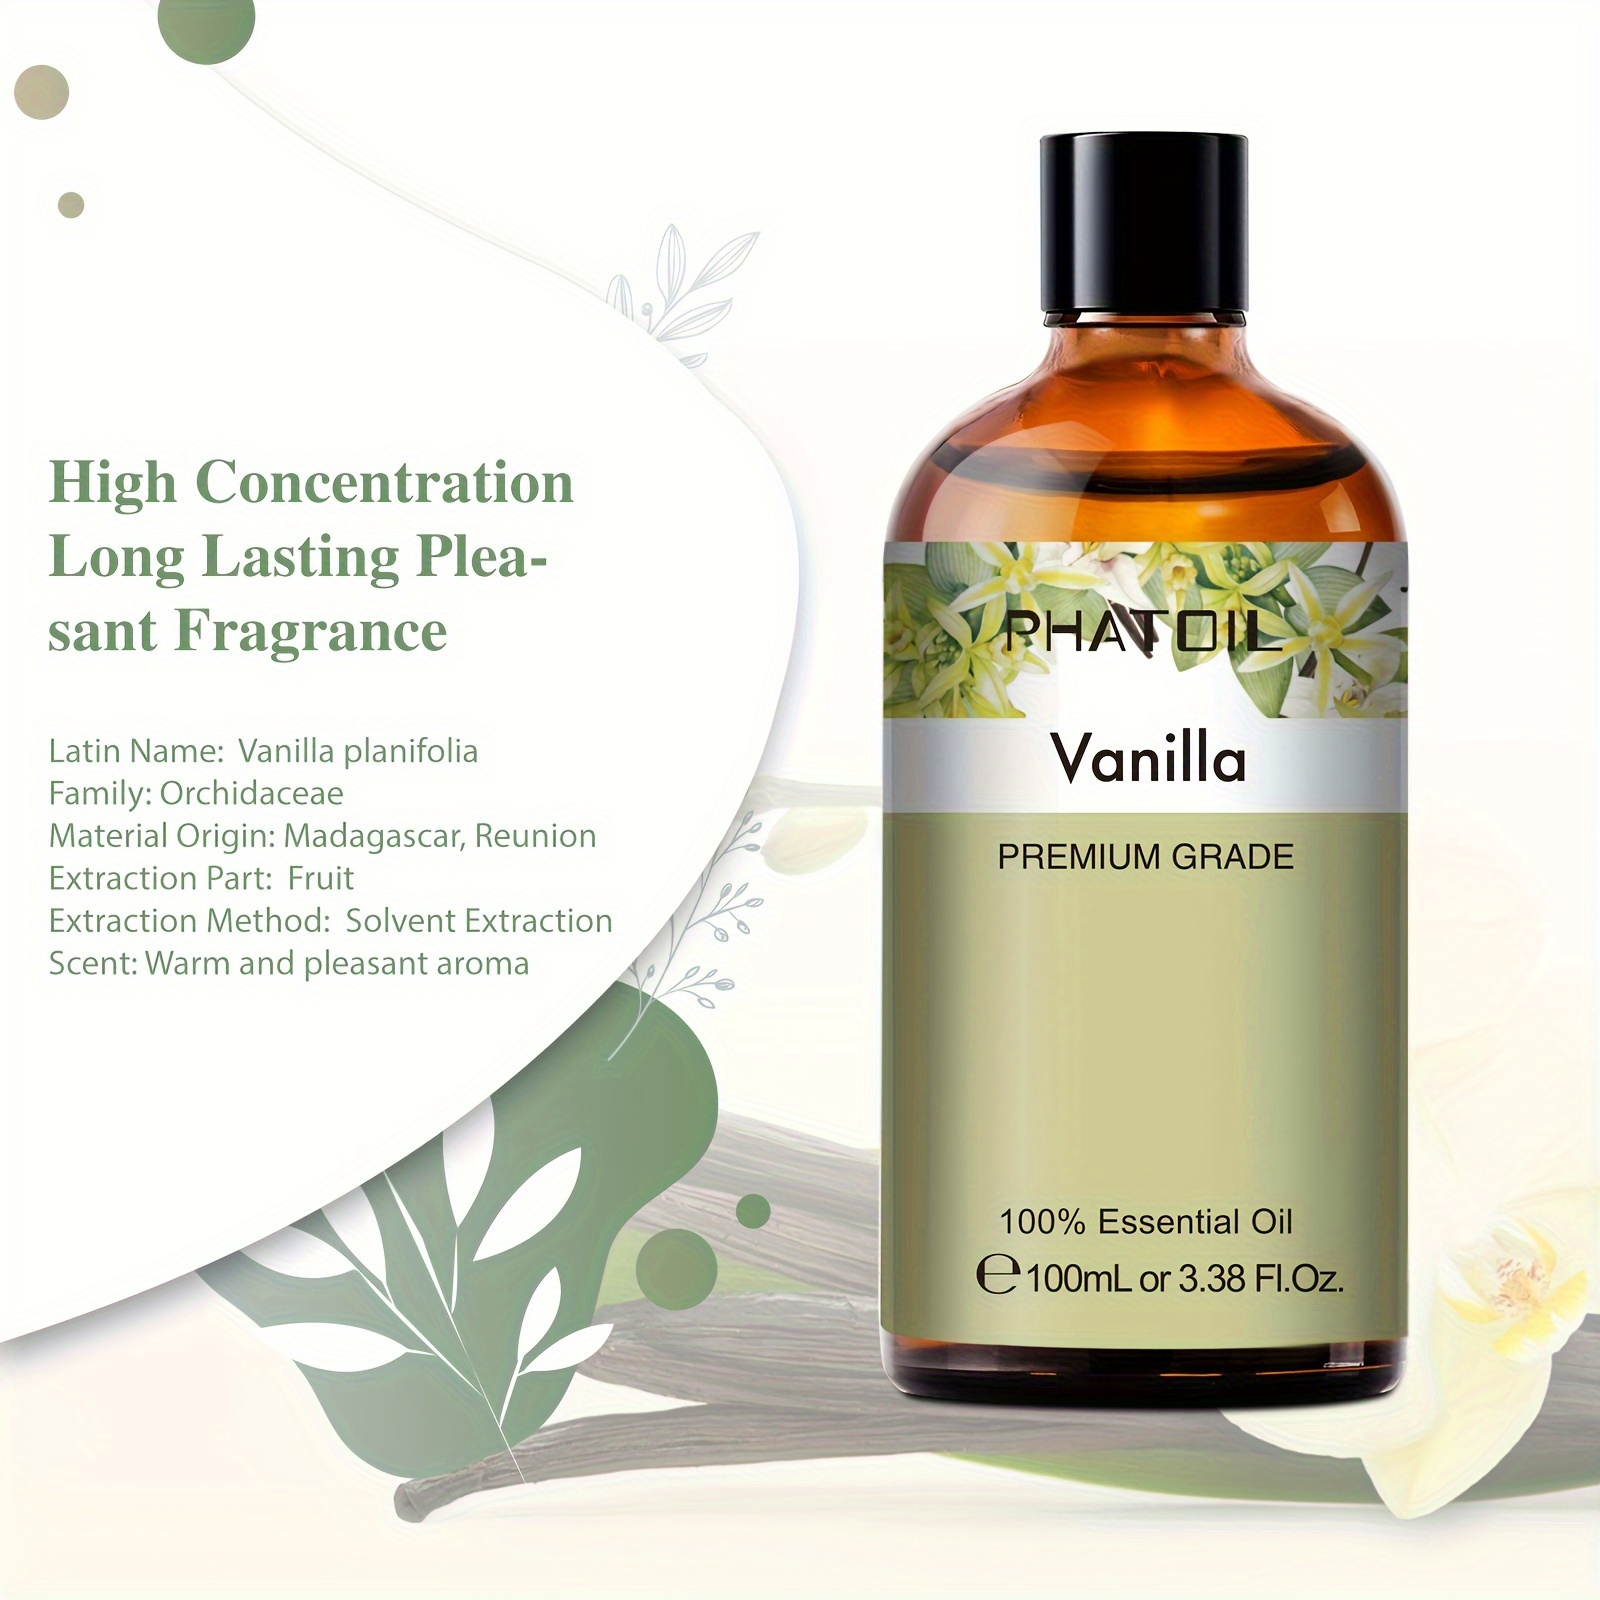 Vanilla Premium Fragrance Oil, 1 fl oz (30ML) Dropper Bottle